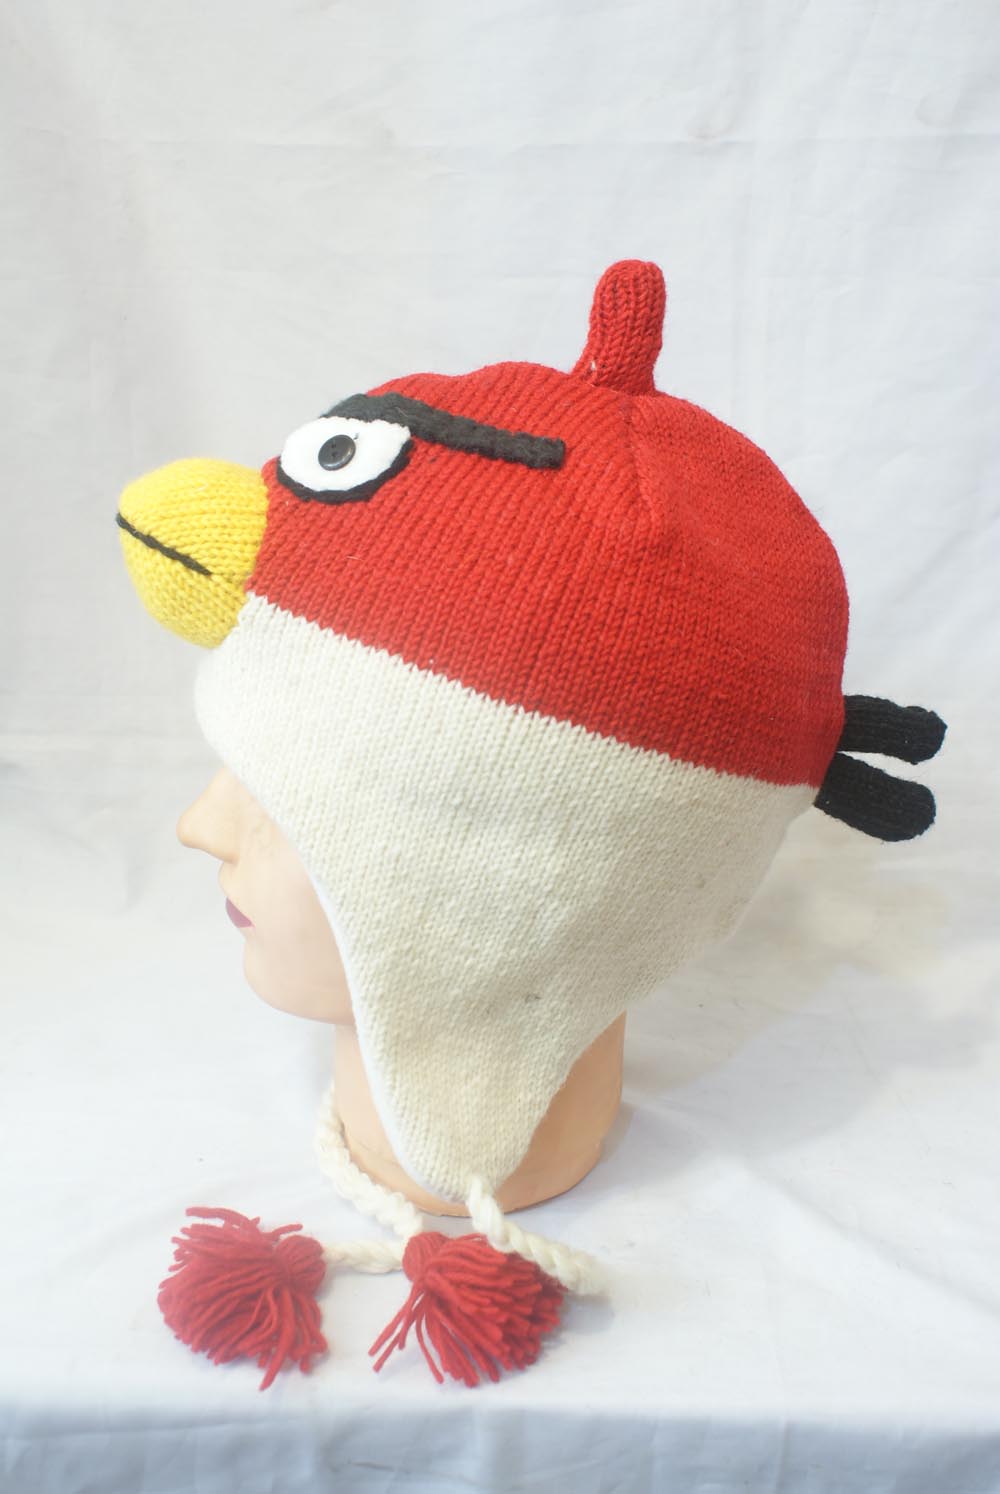 Angry Bird Cap